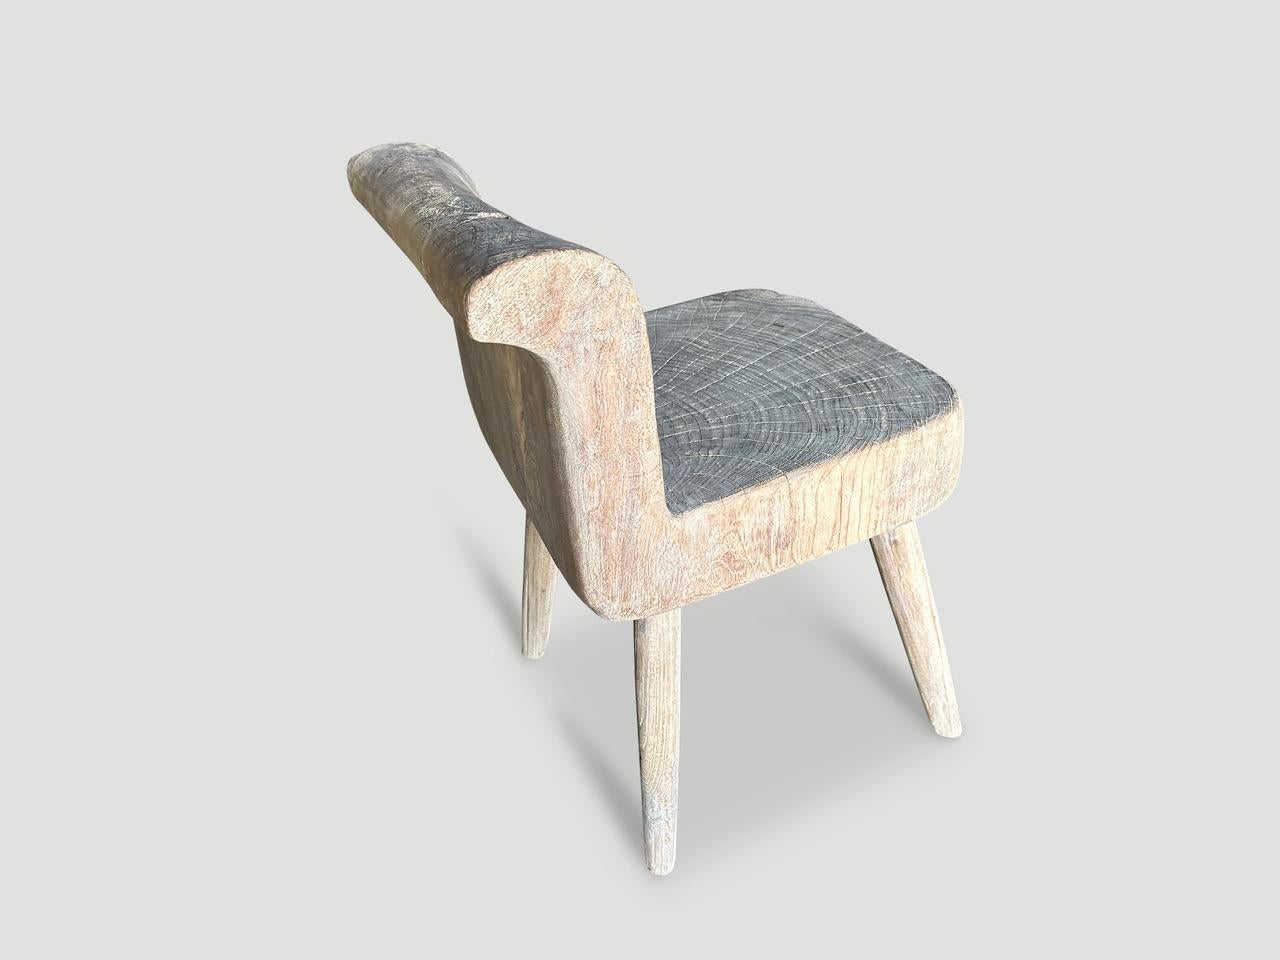 Organic Modern Andrianna Shamaris Sculptural Teak Wood Chair or Side Table For Sale